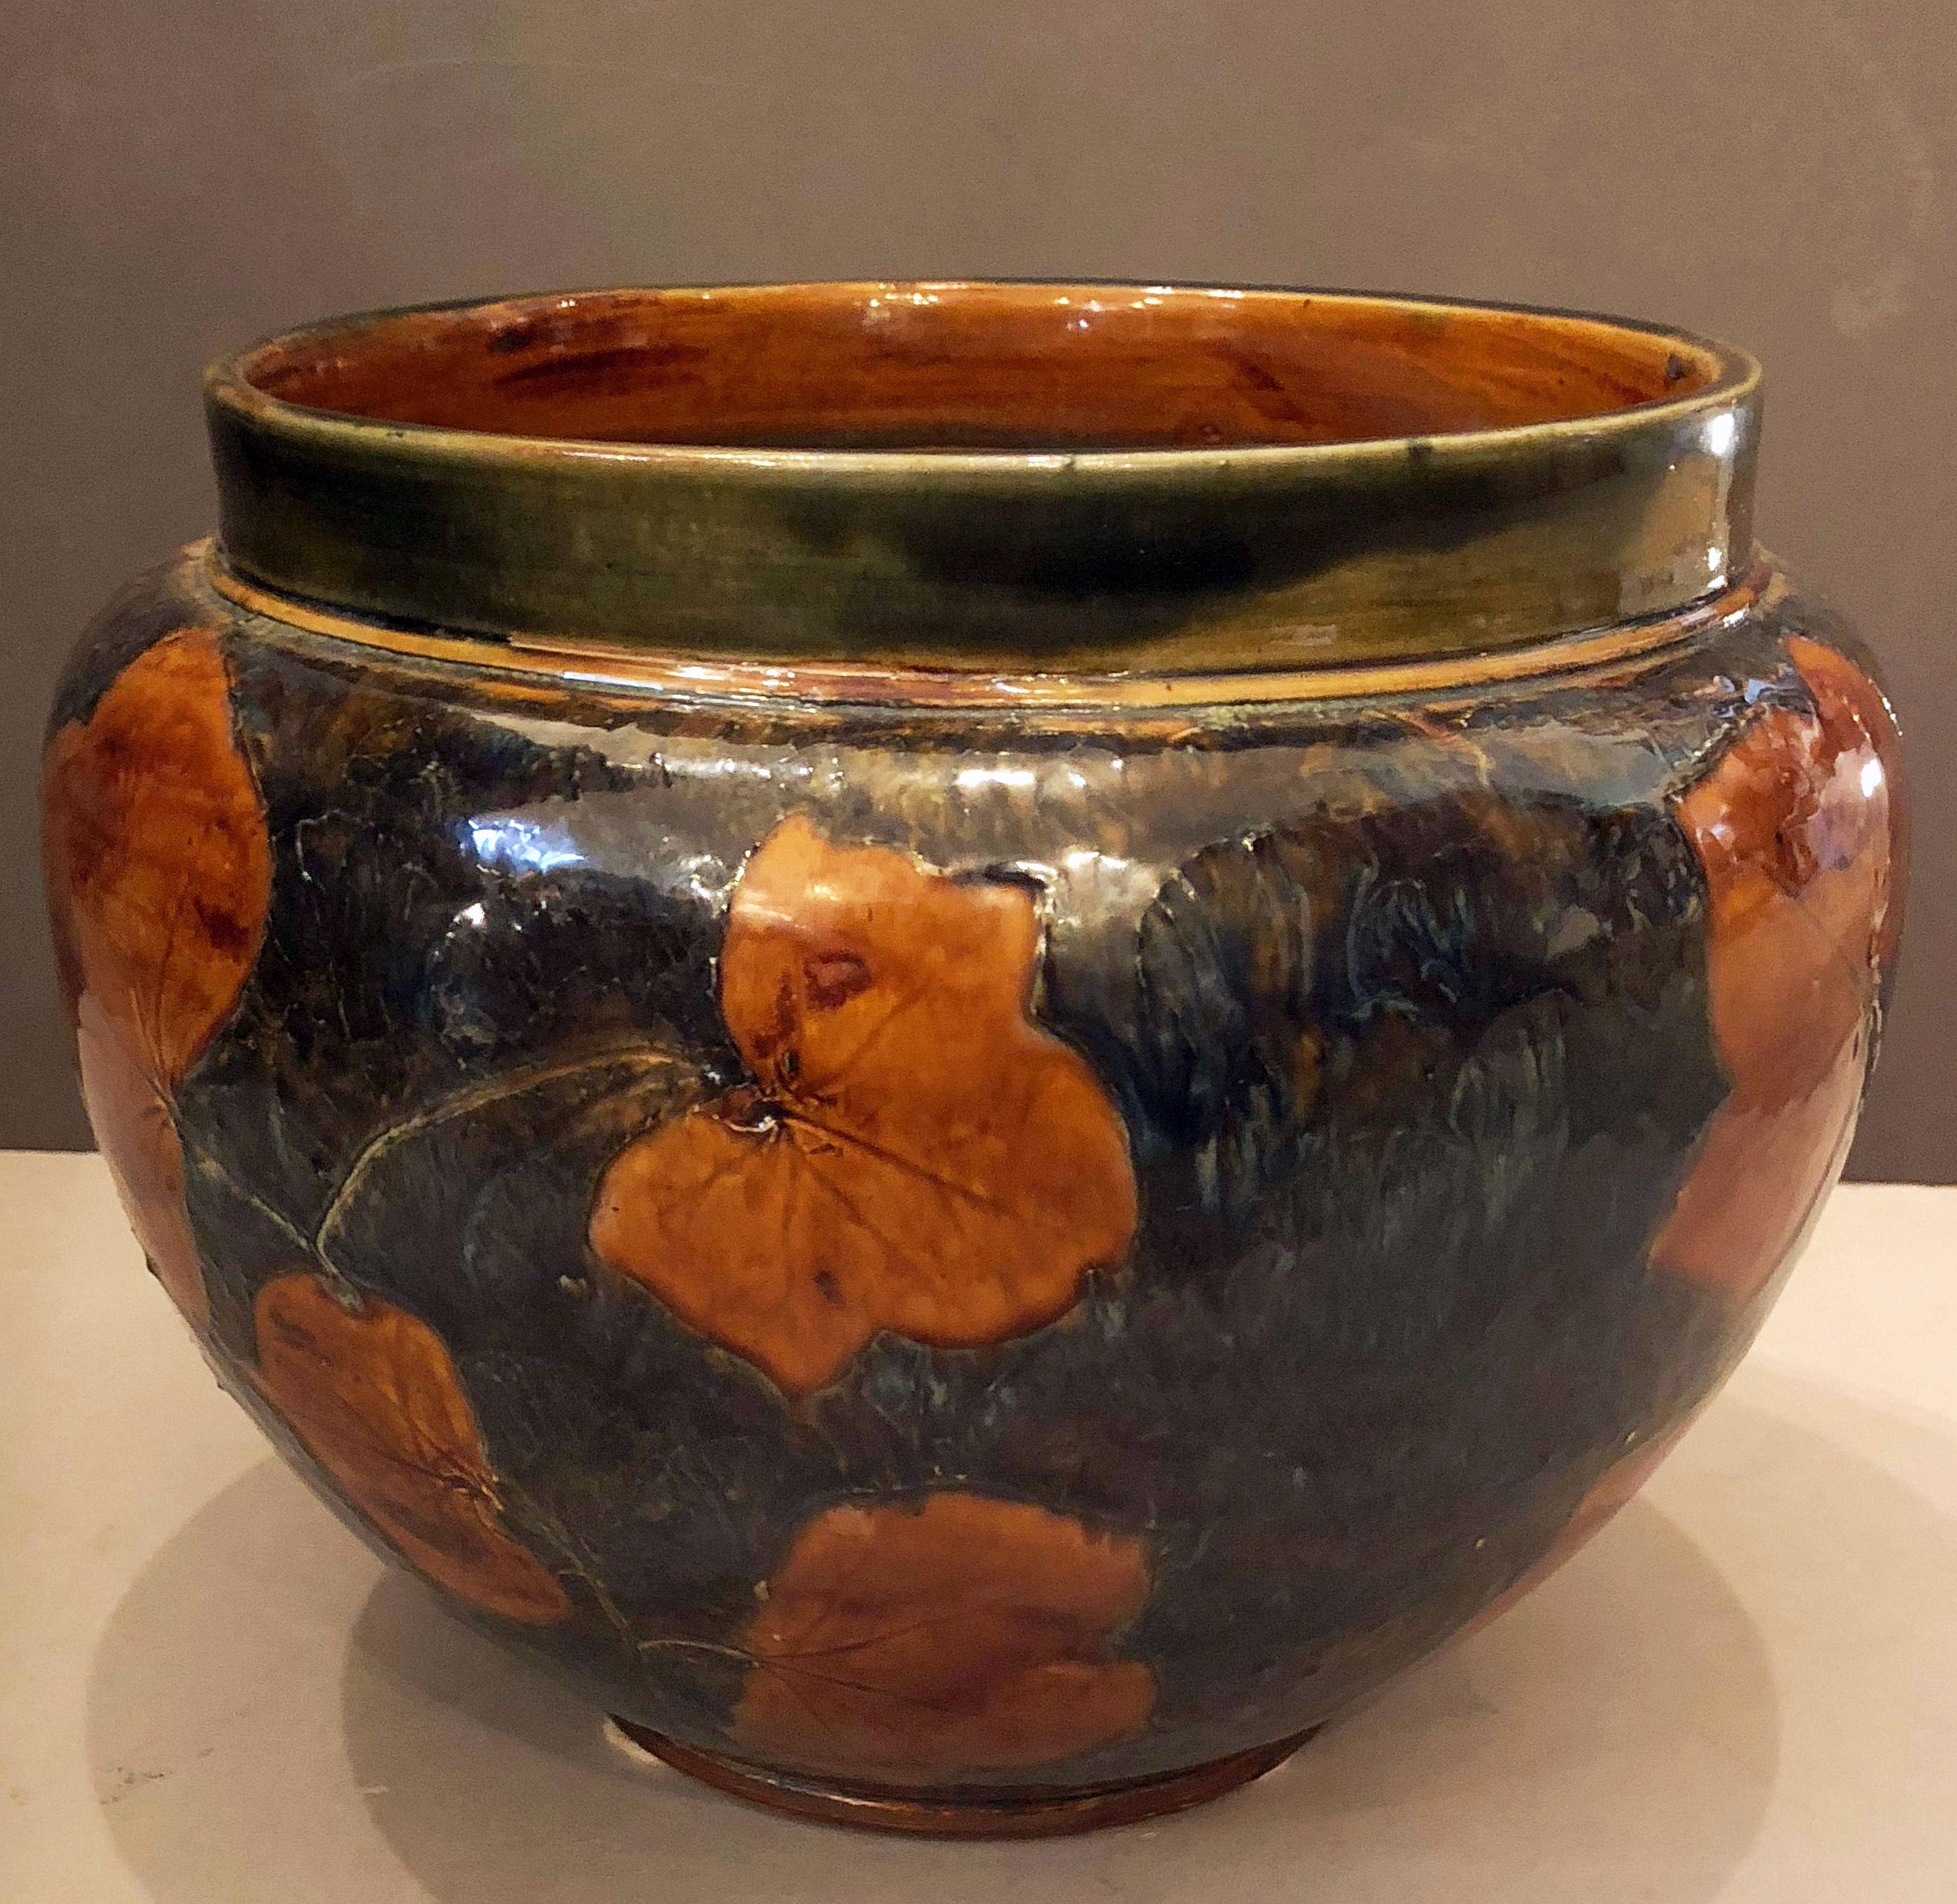 Glazed Royal Doulton Jardiniere or Garden Pot Planter with Autumn Leaves Design